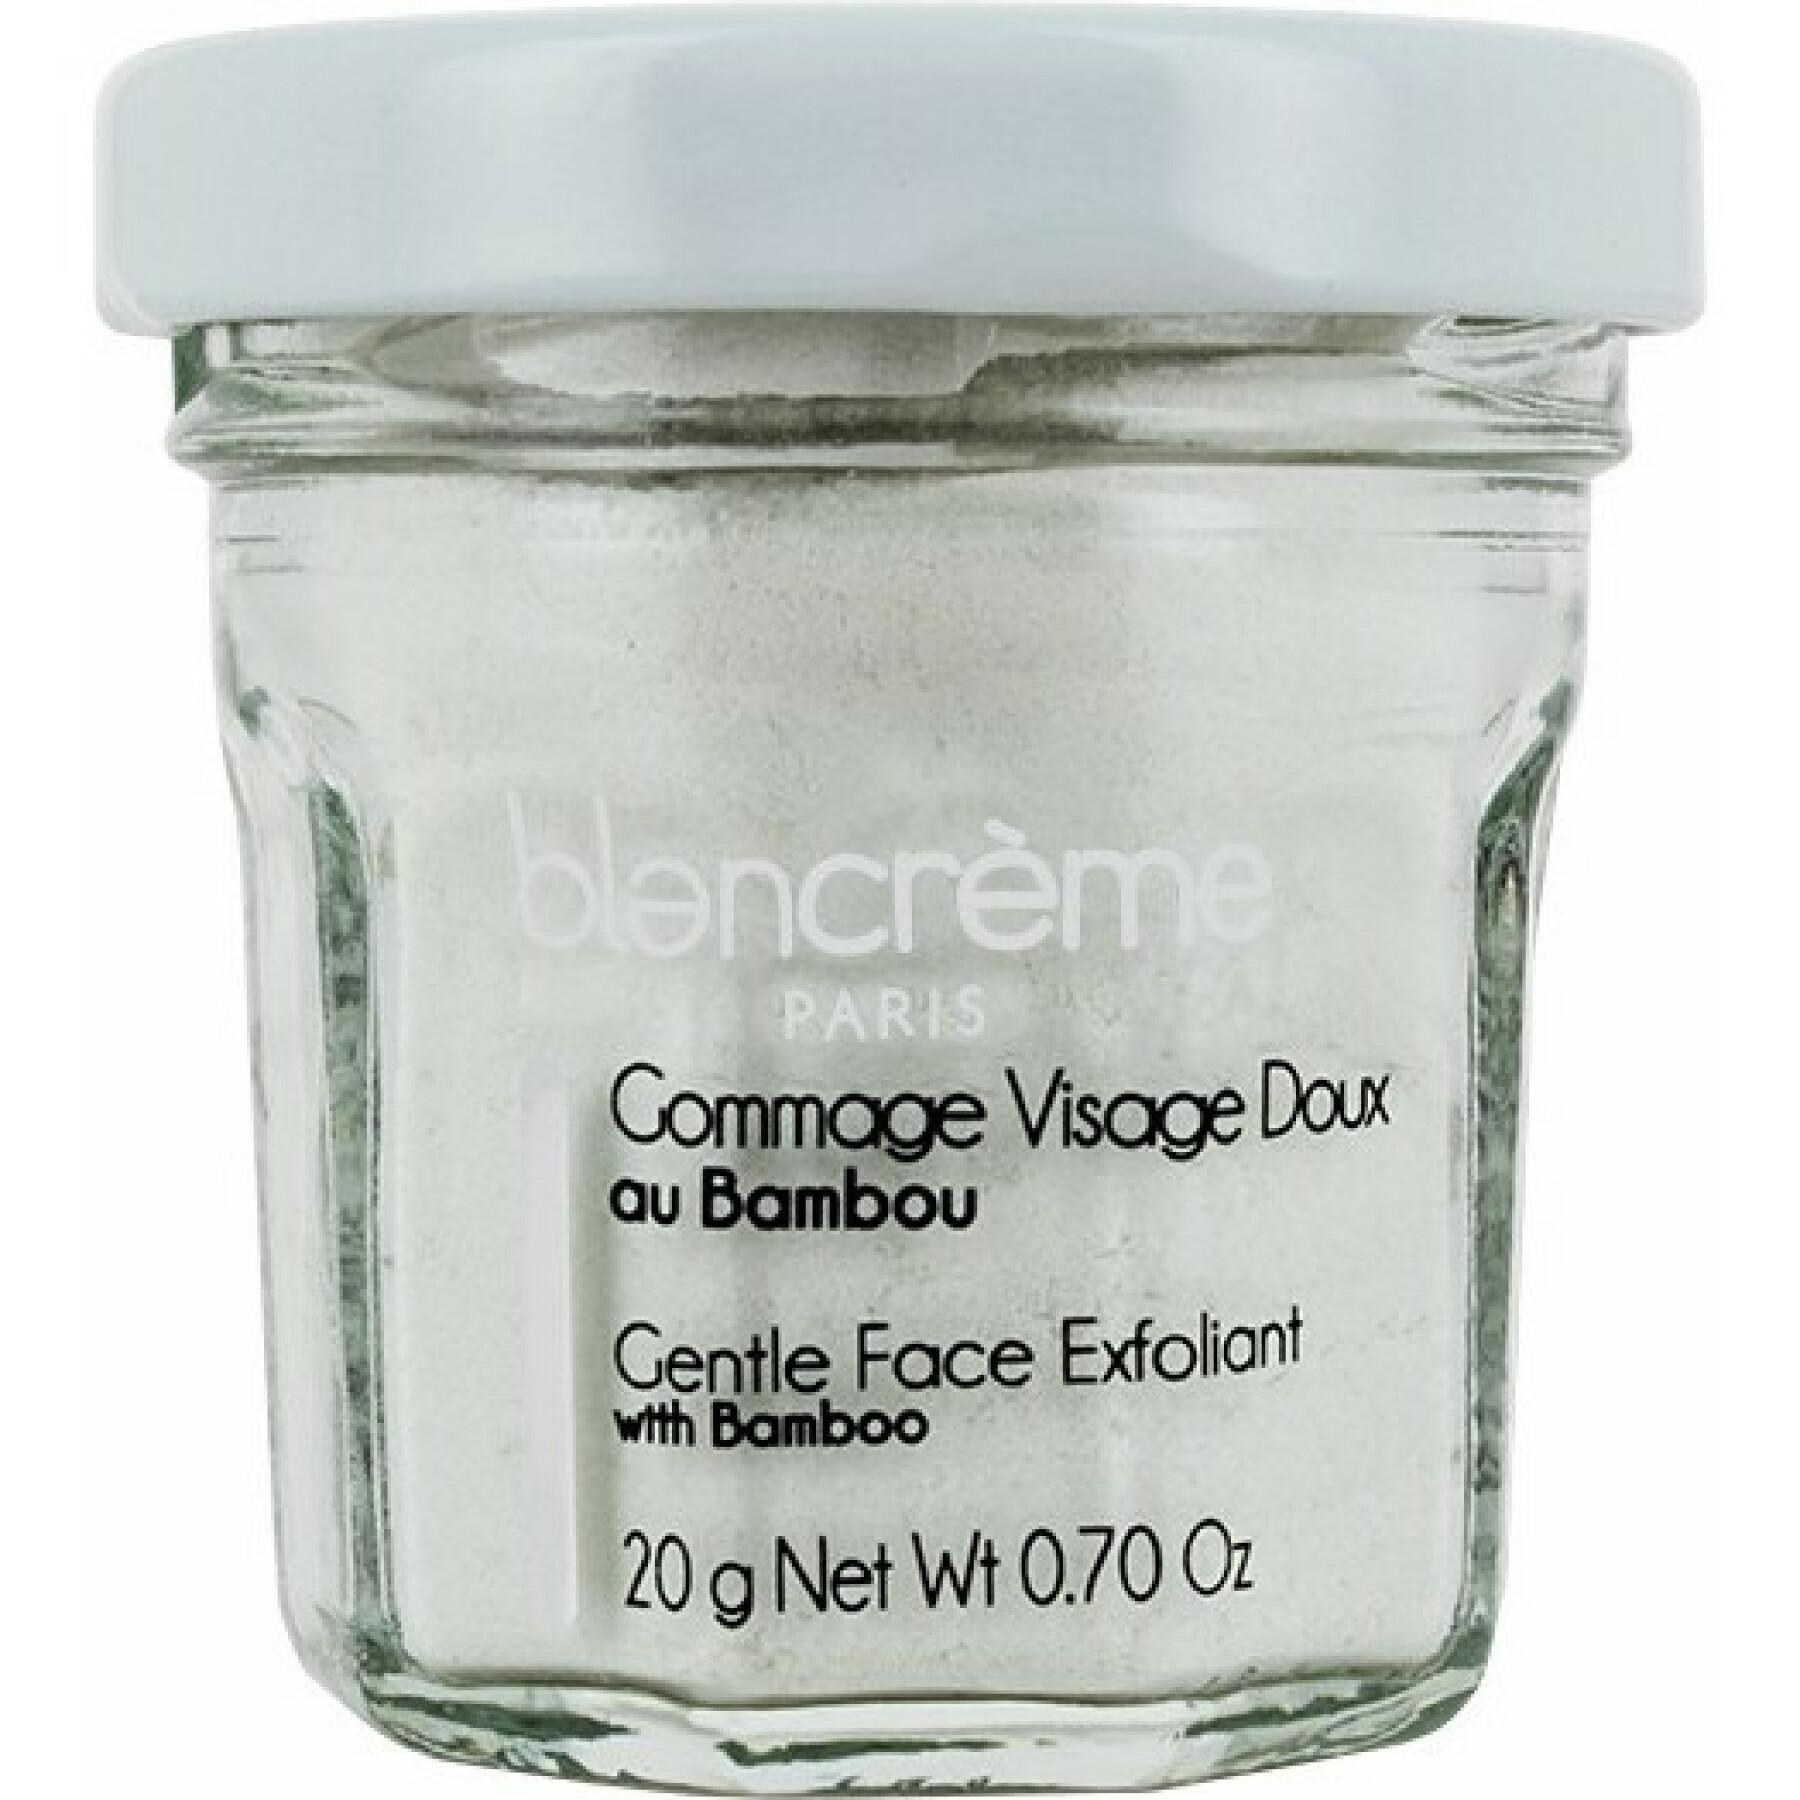 Face scrub - bamboo - Blancreme 40 ml